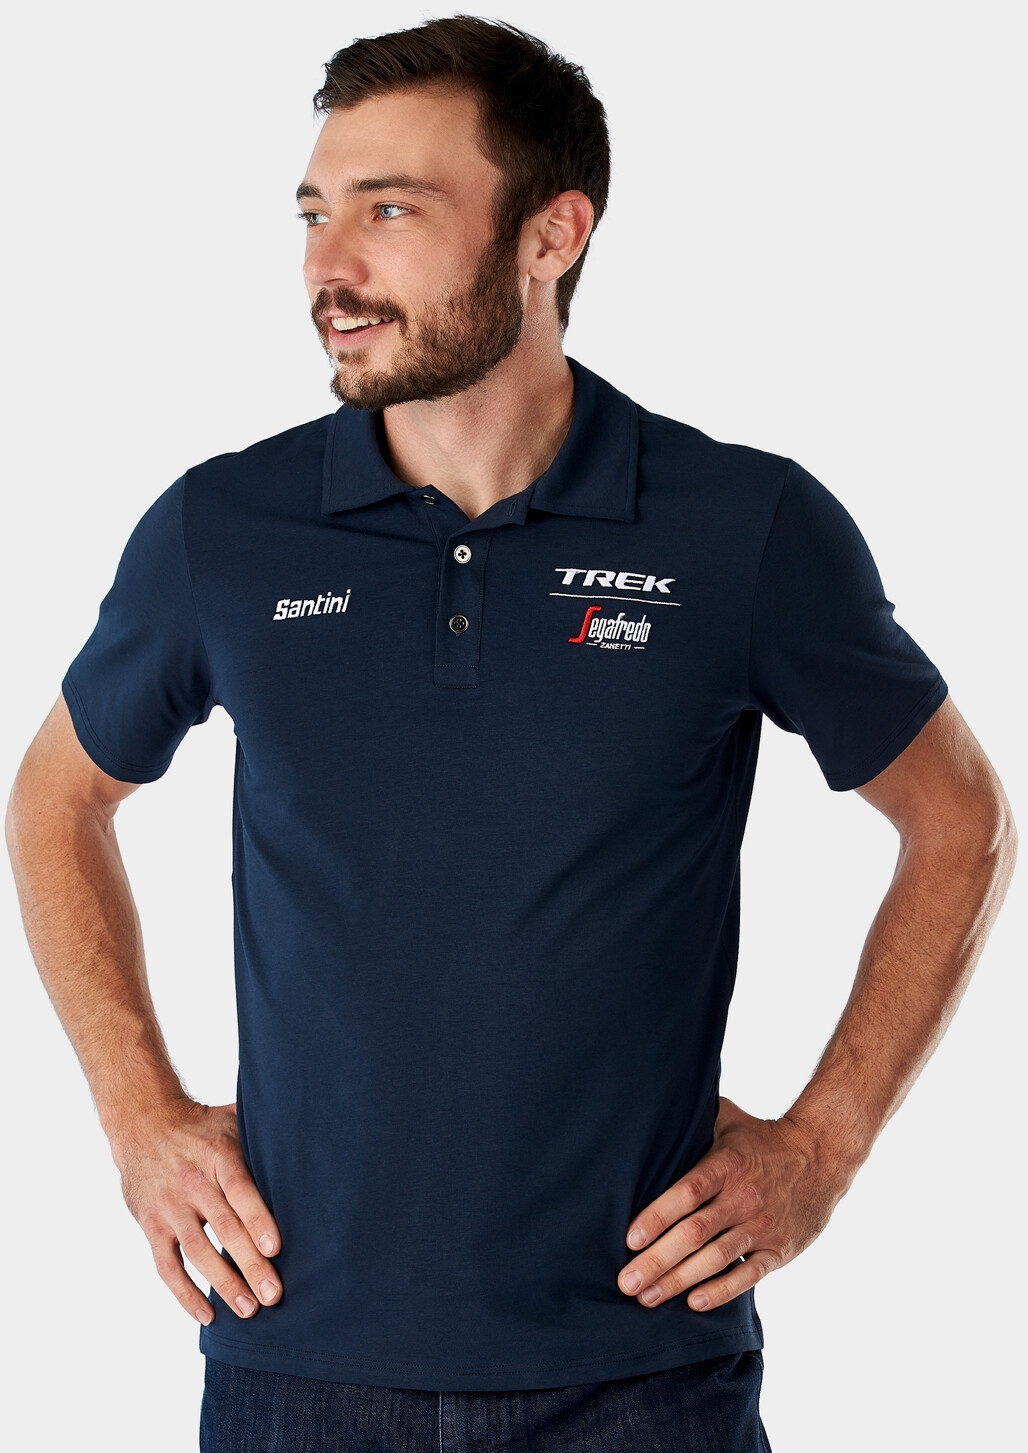 Santini Trek-Segafredo Men's Team Polo - Shop | Nevis Cycles